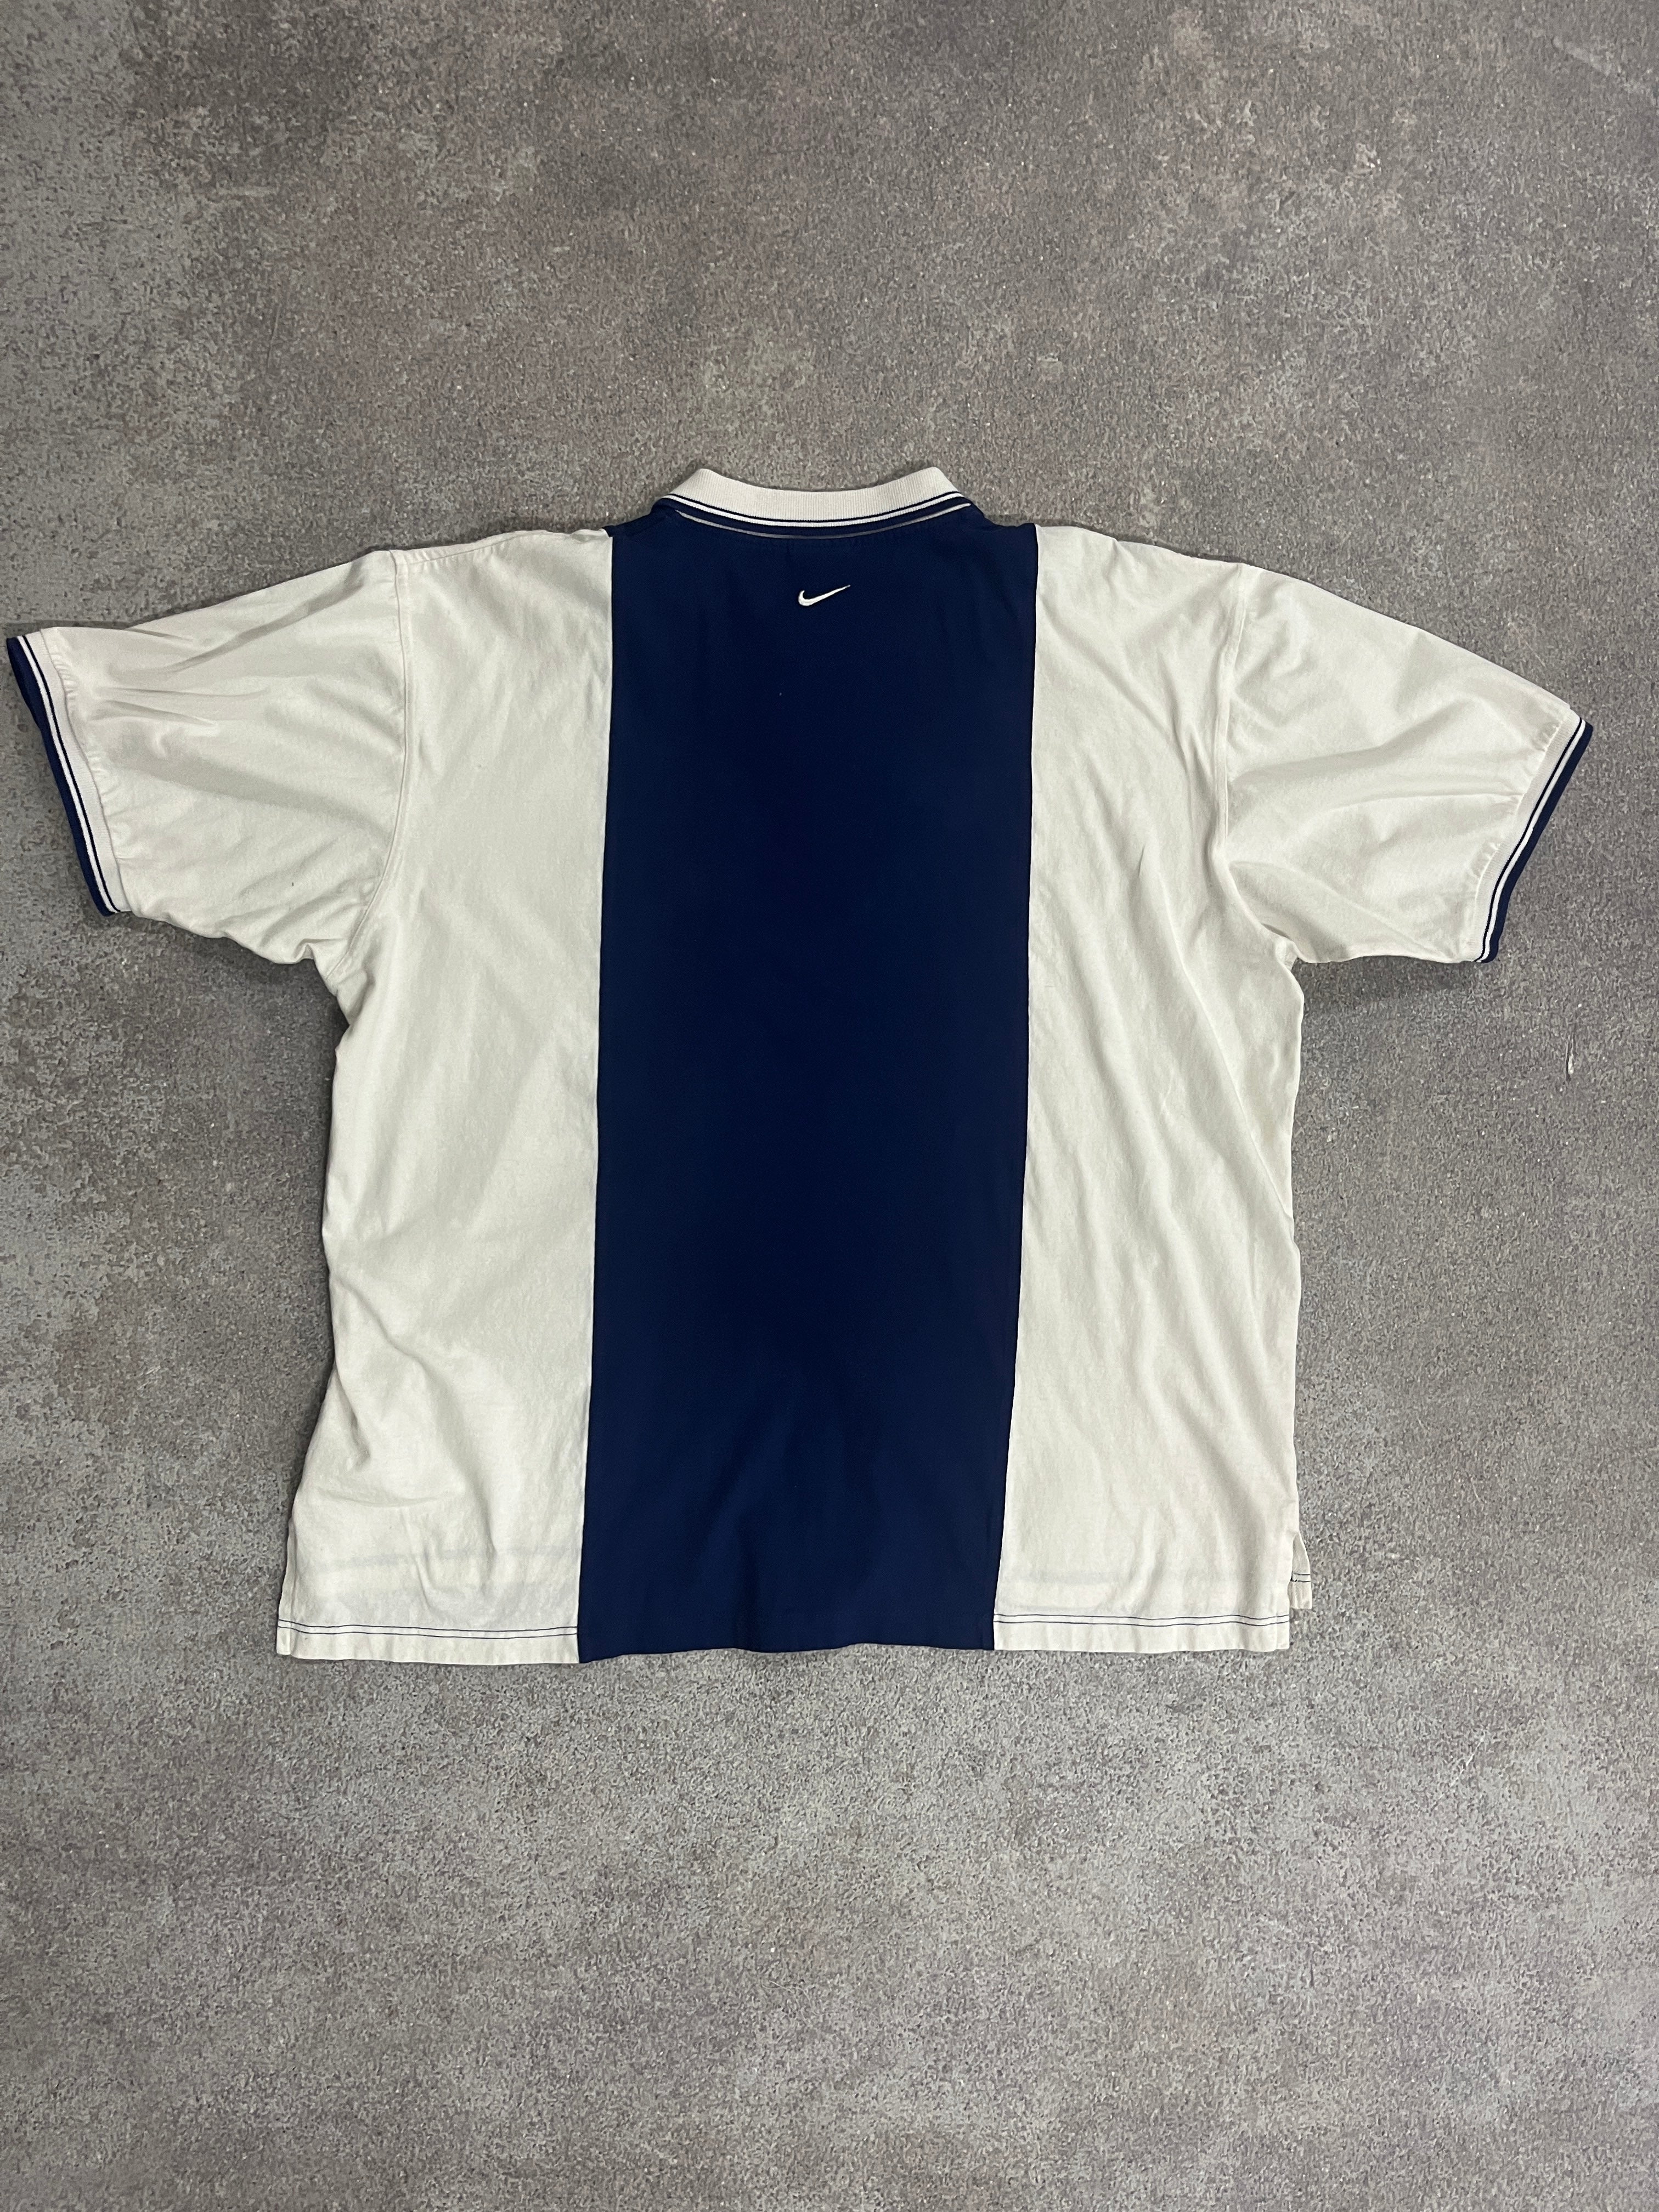 Vintage Nike Jersey TShirt White/Blue // Large - RHAGHOUSE VINTAGE